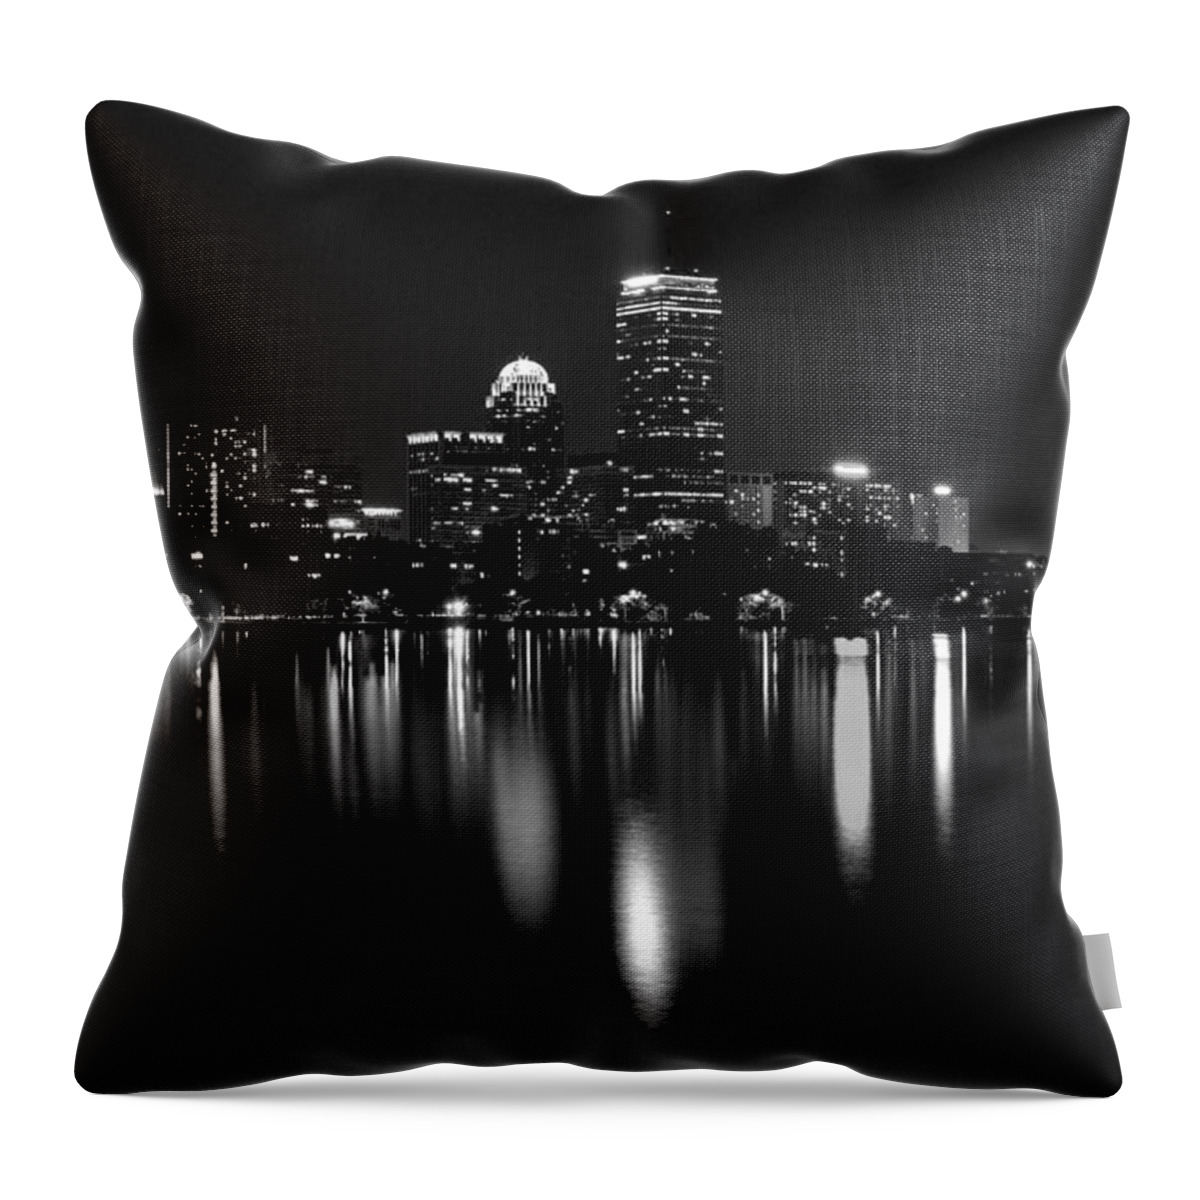 Boston Throw Pillow featuring the photograph Boston Skyline by Night - Black and White by Jatin Thakkar